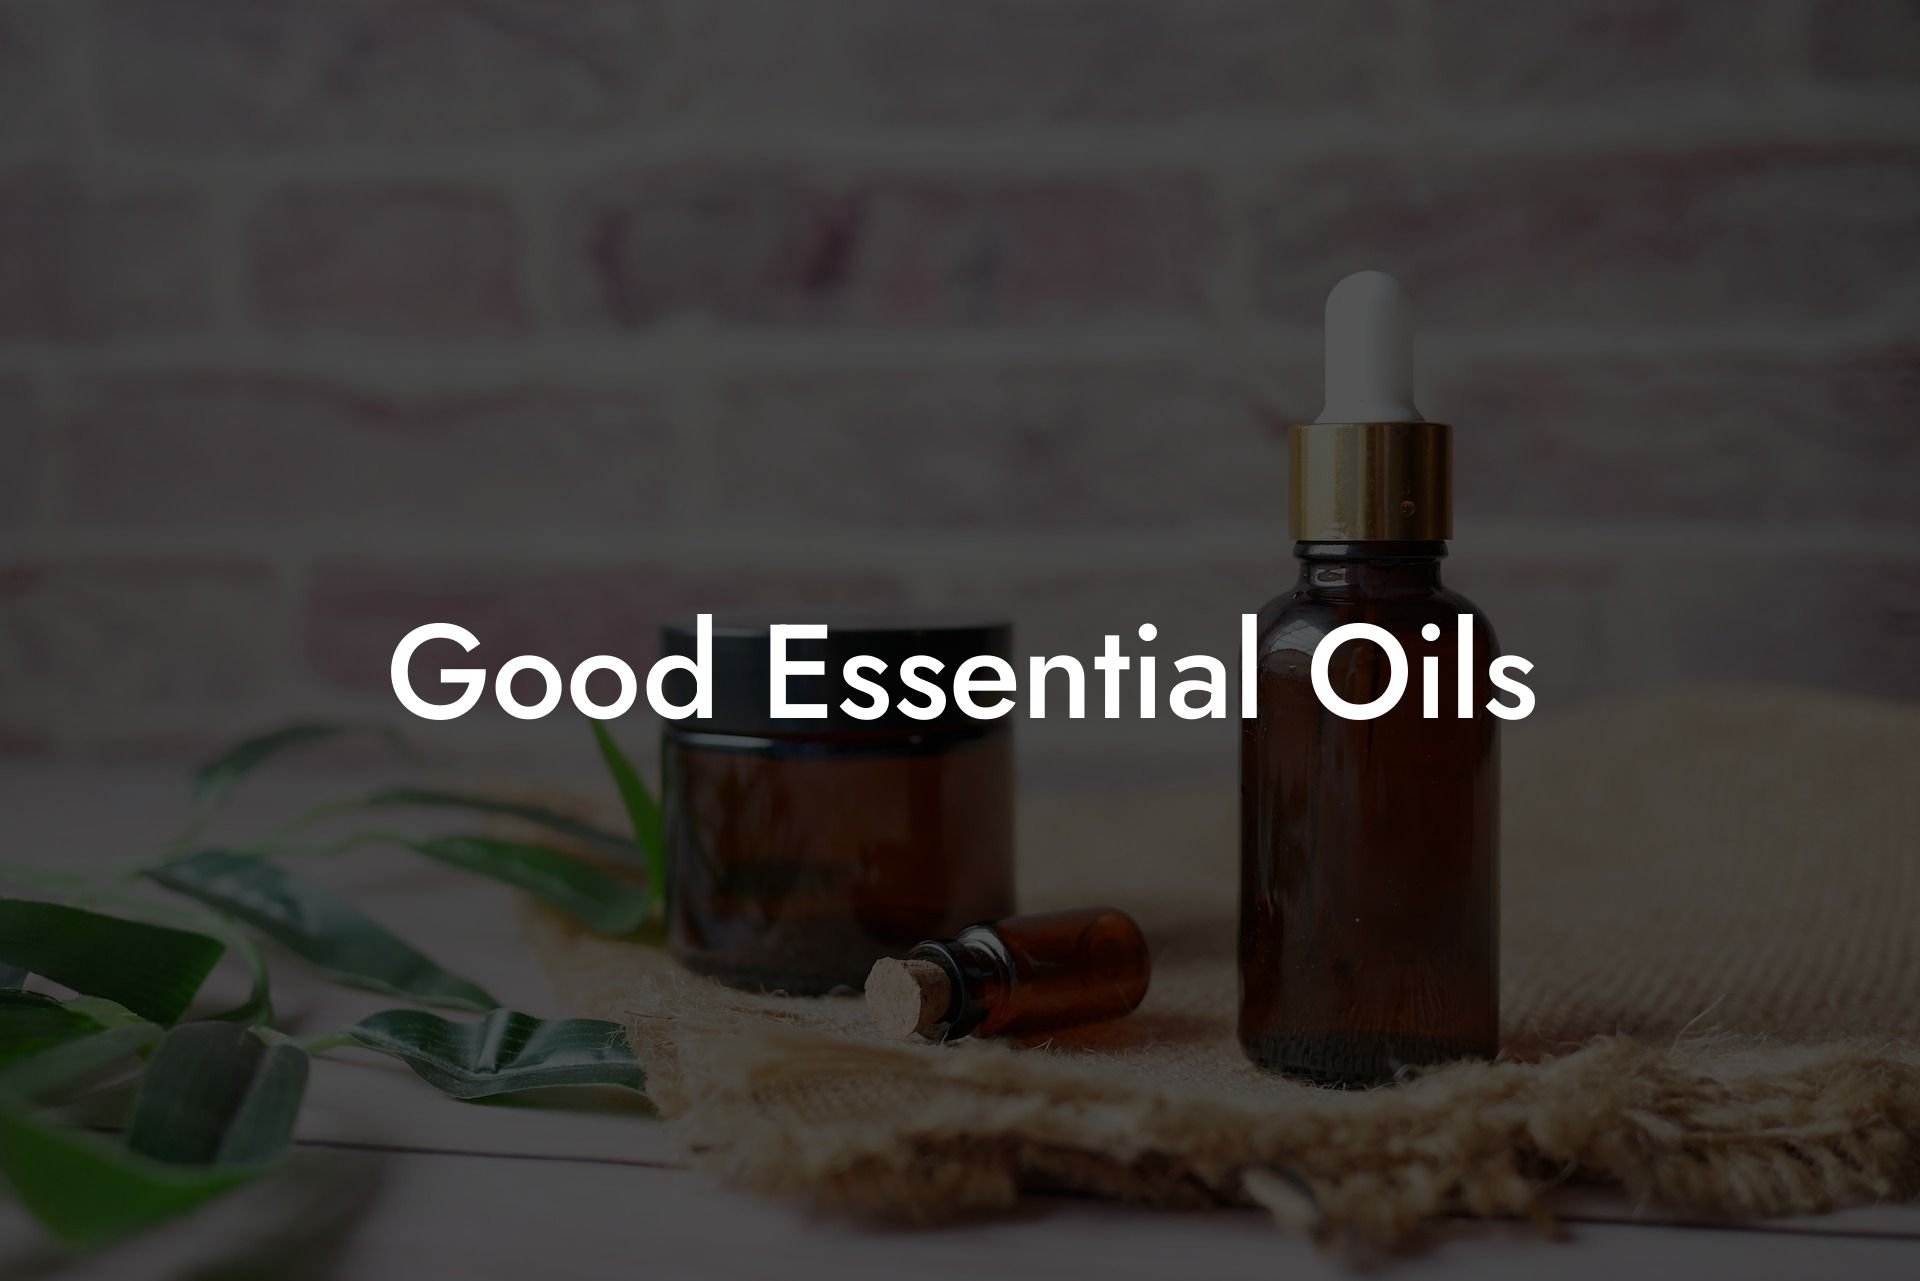 Good Essential Oils